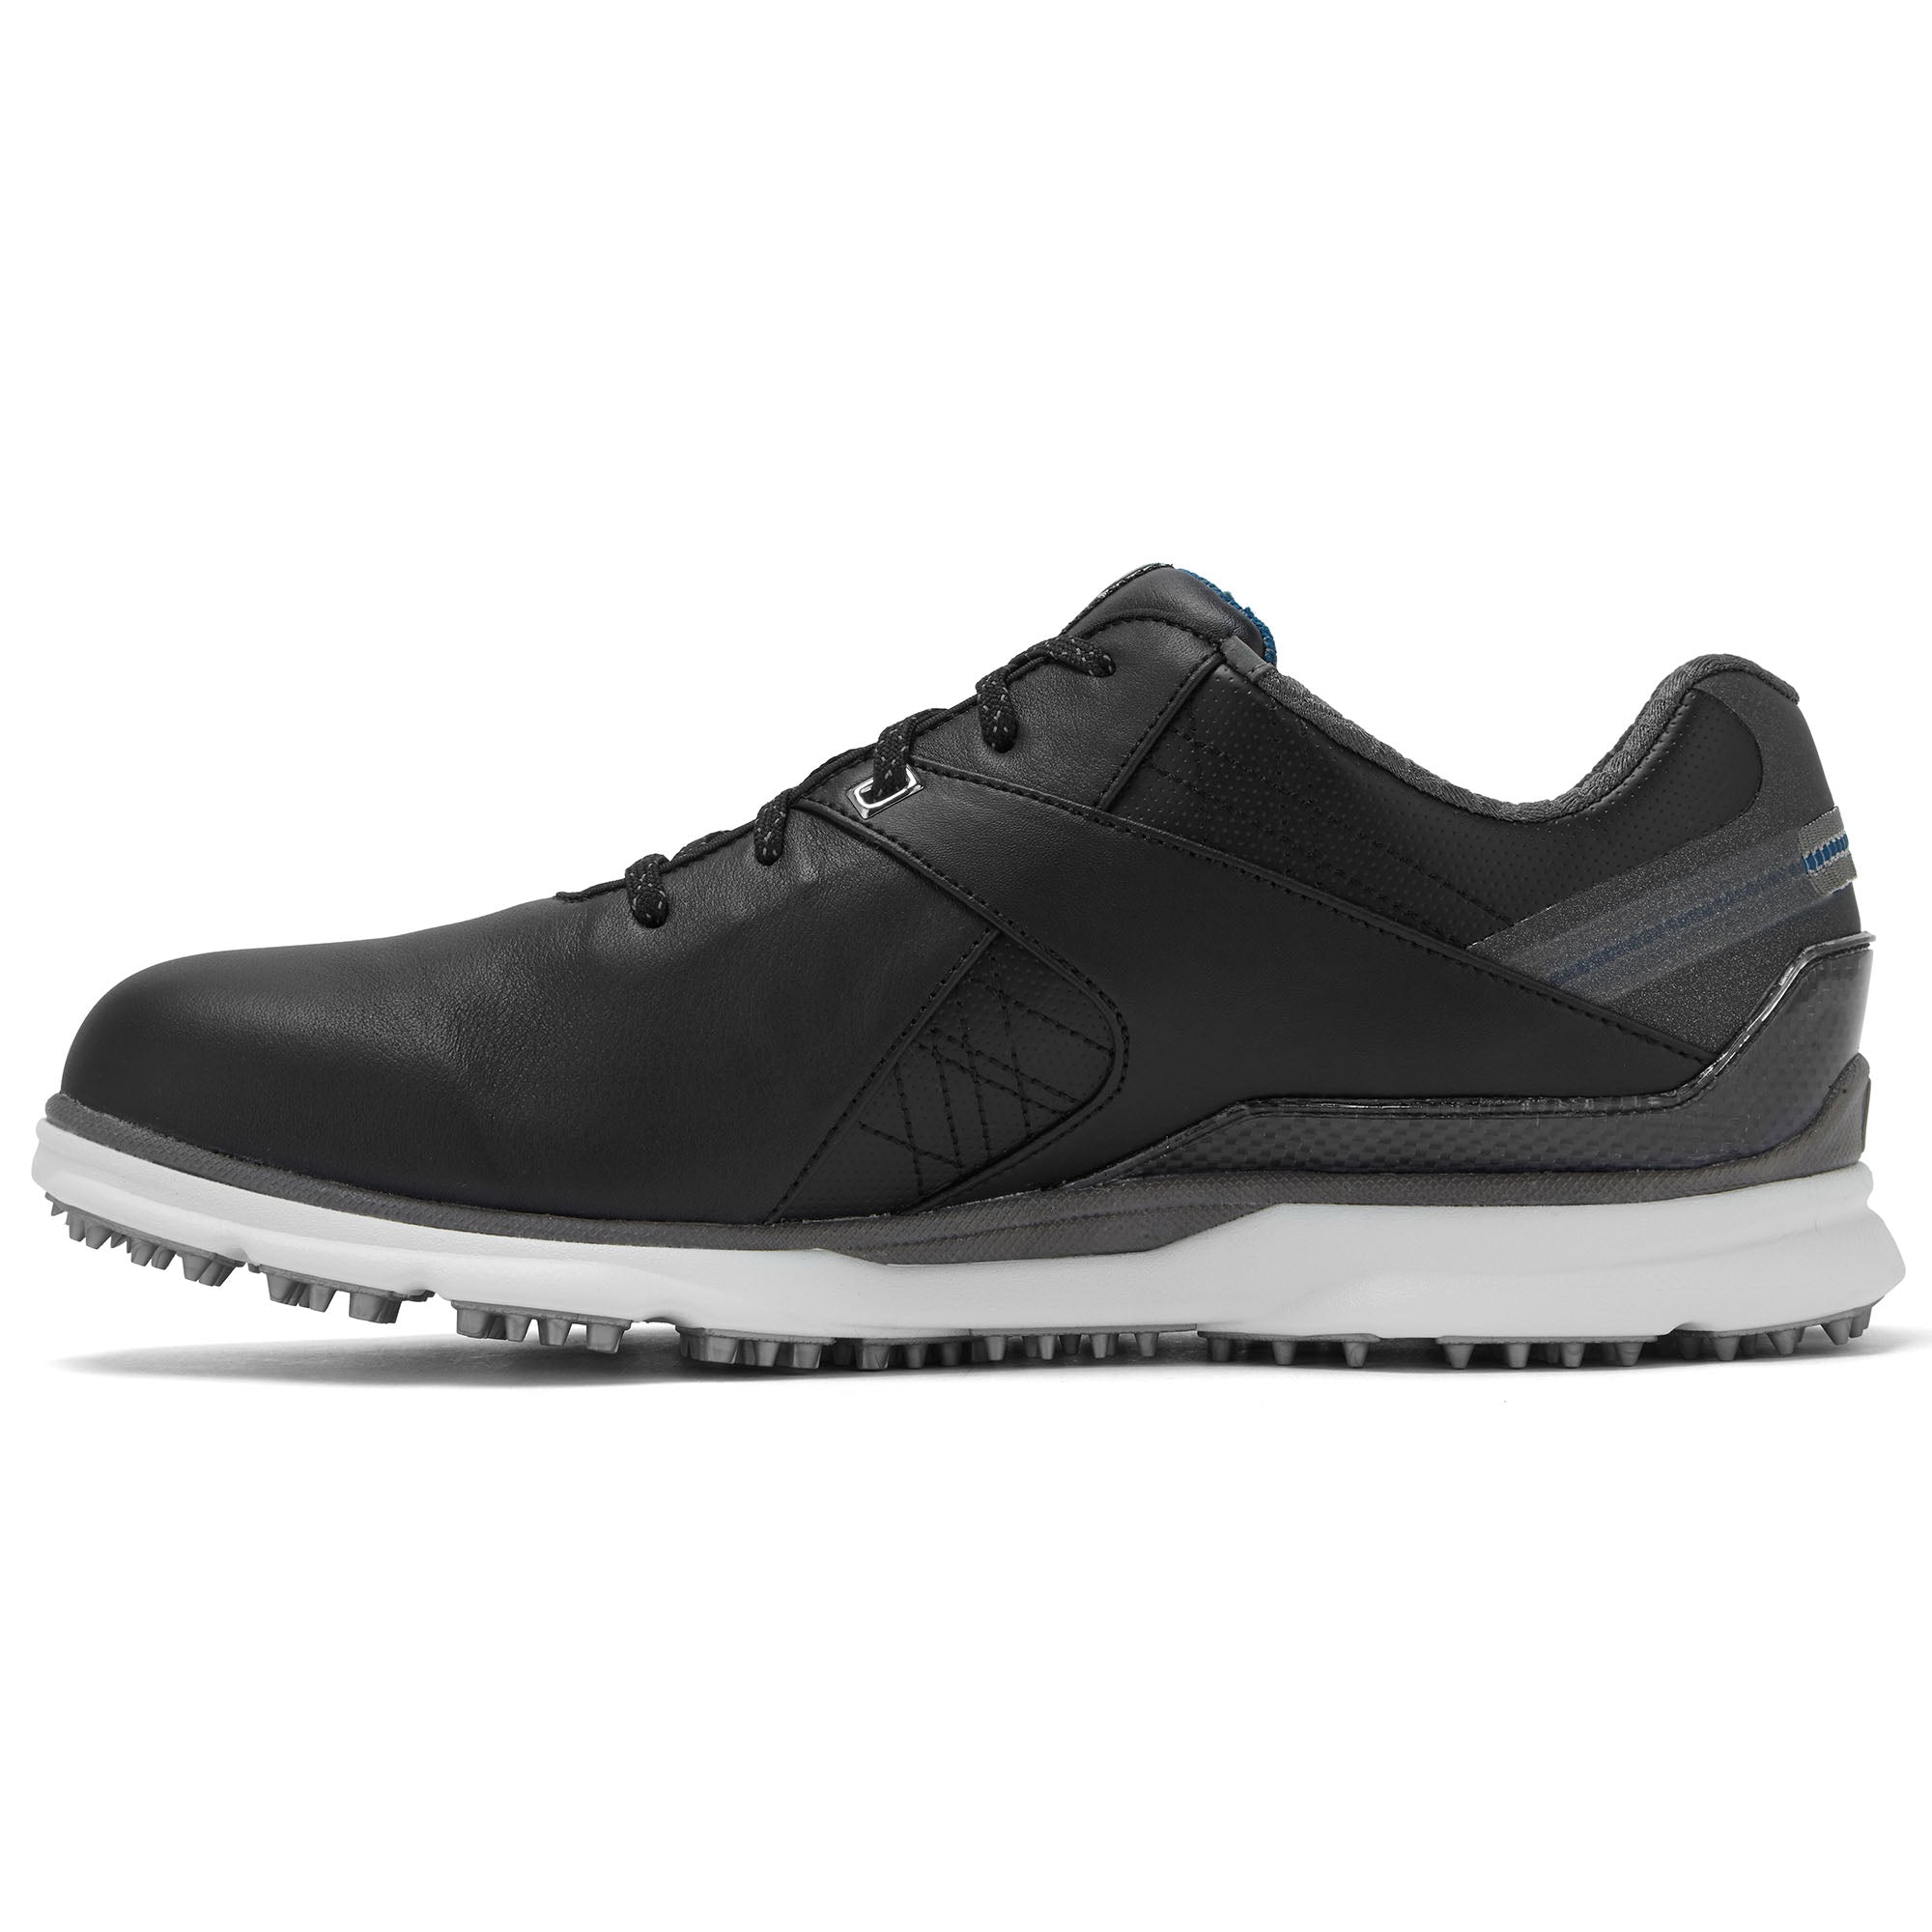 FootJoy Pro SL Carbon Golf Shoes 53108 Black | Function18